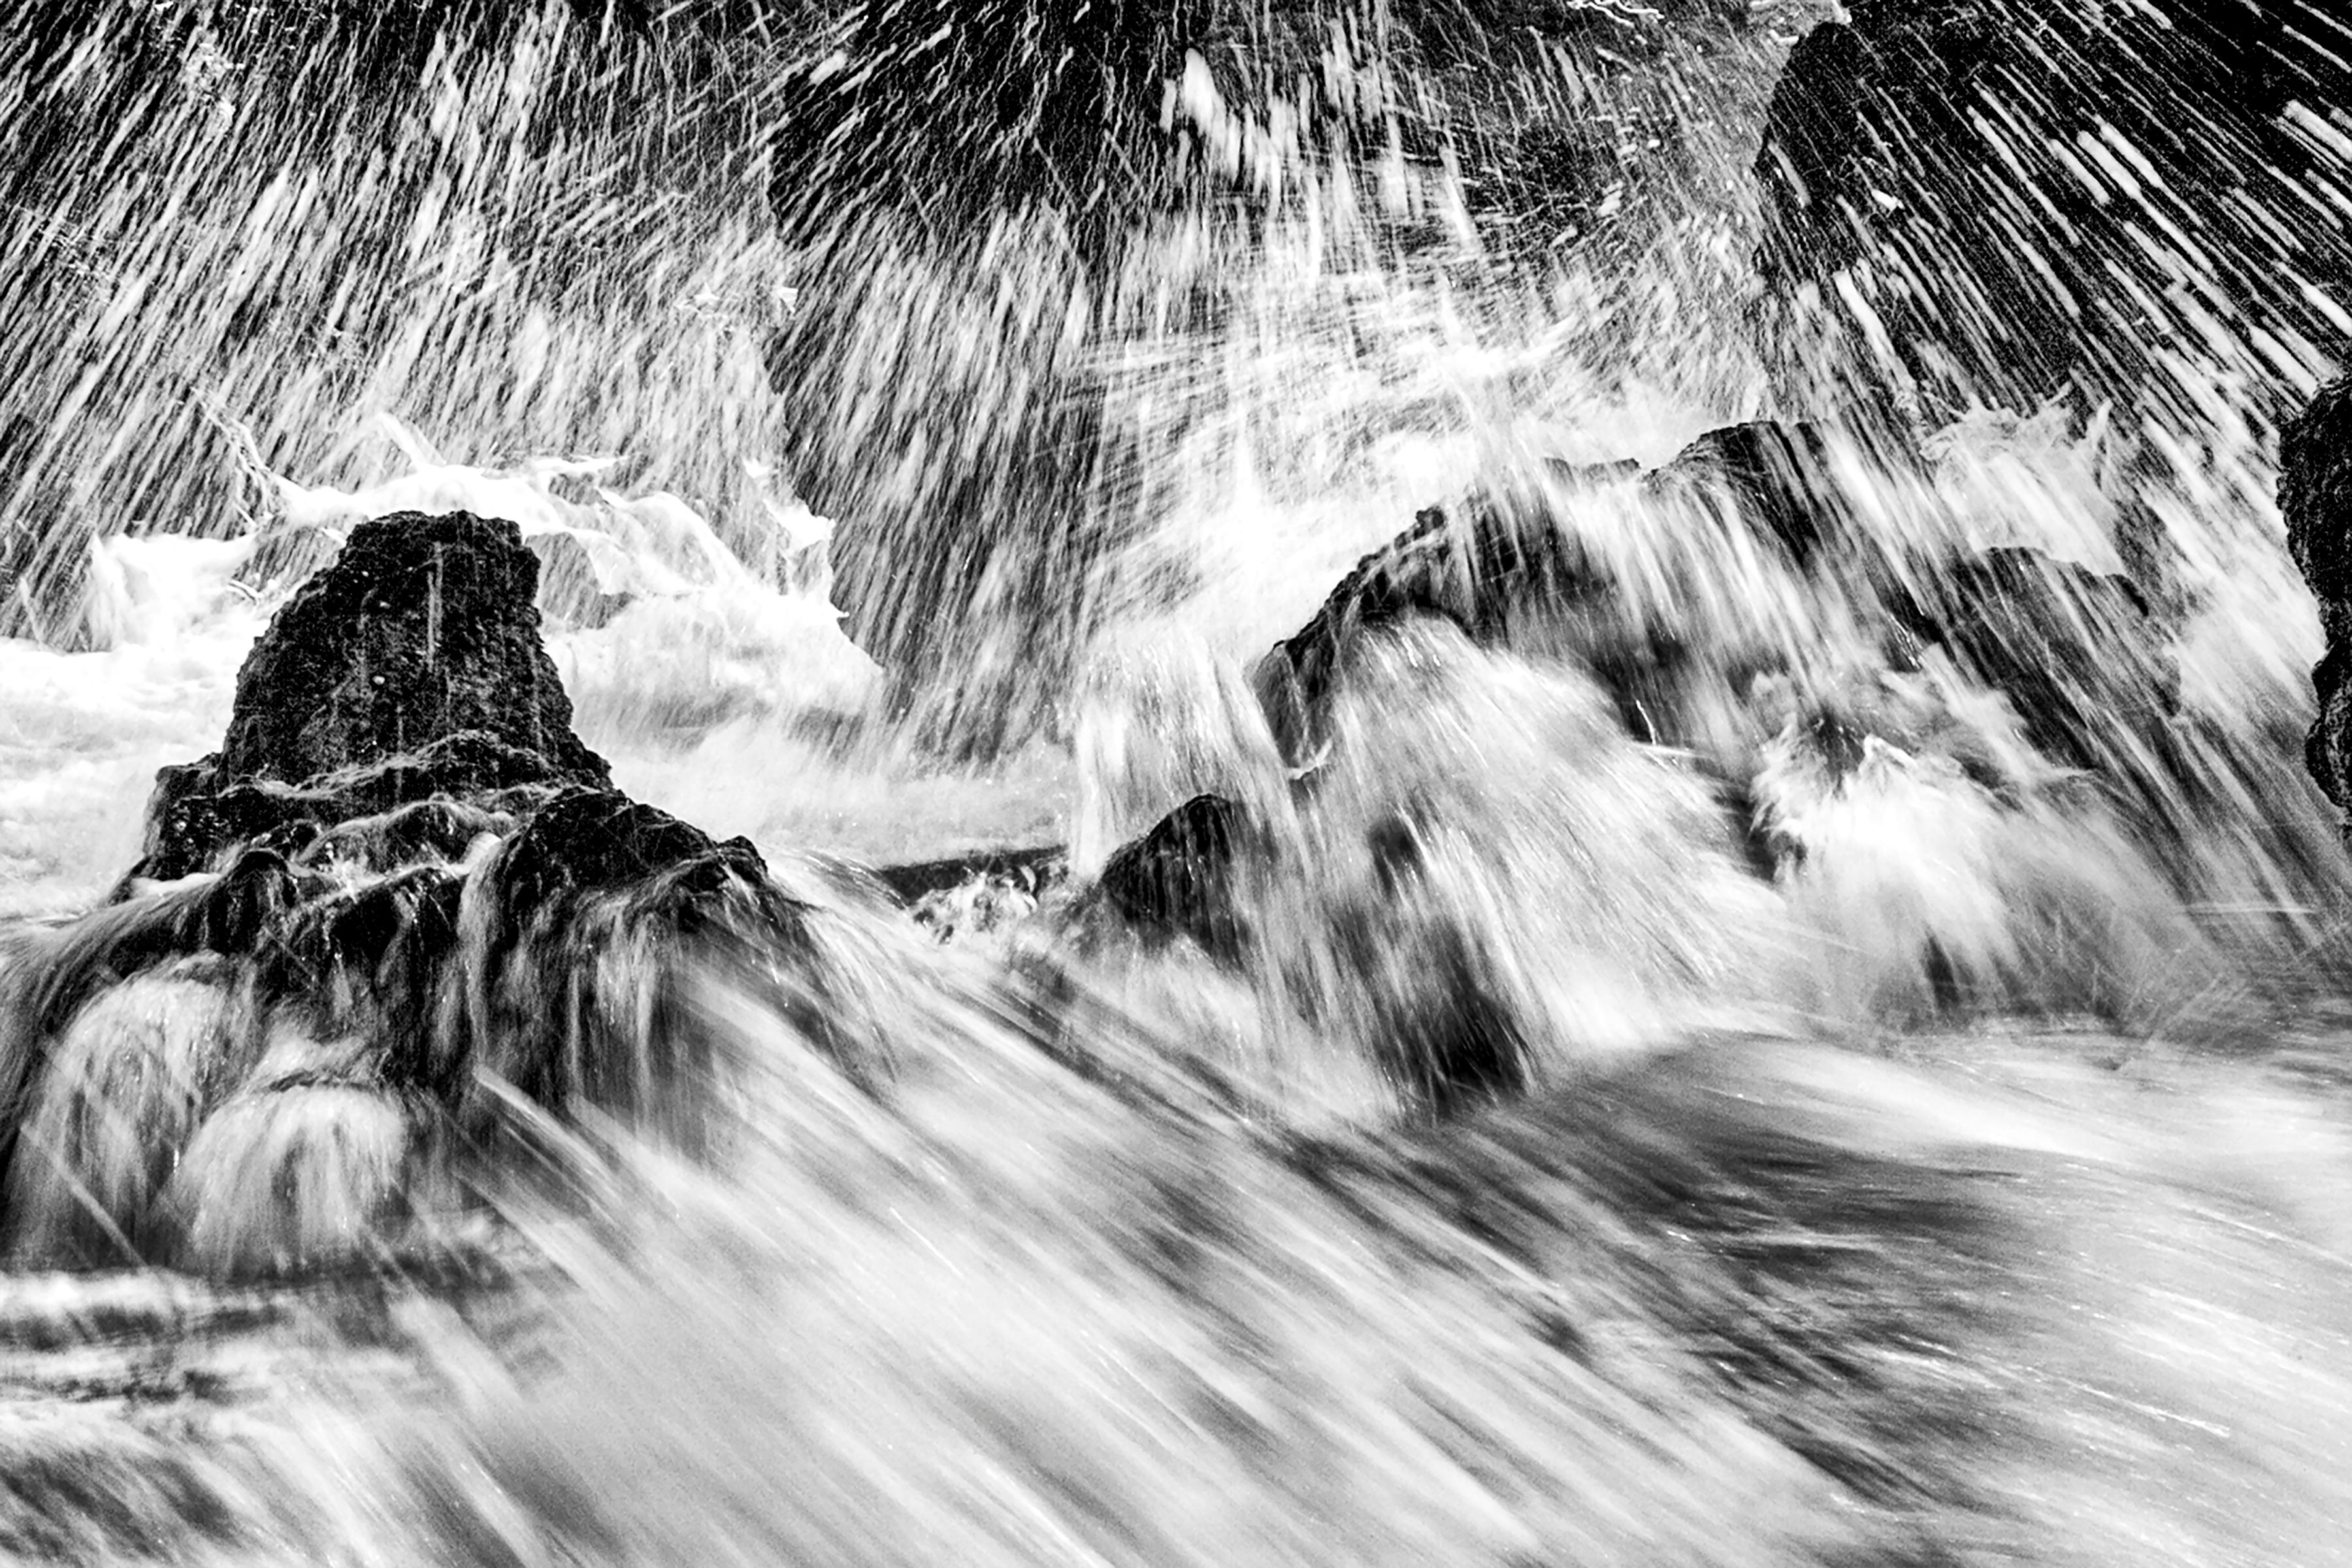 Holly Gordon Landscape Photograph - Water Music Series #4988 : landscape photography